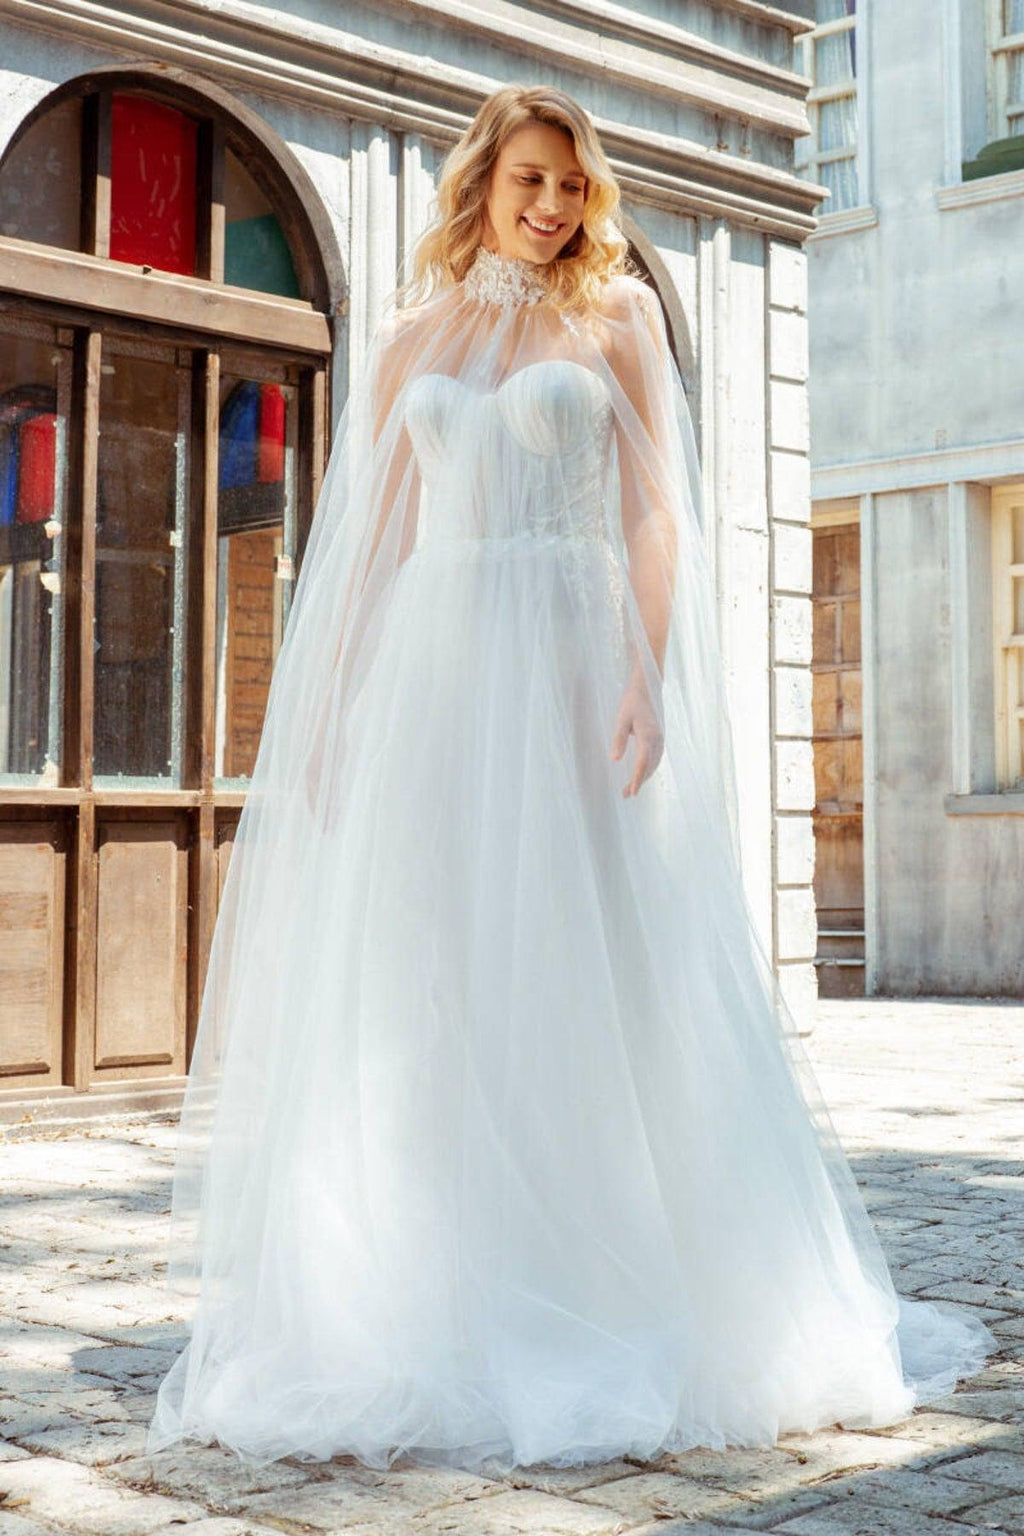 DAYMARA, Strapless A-line wedding dress